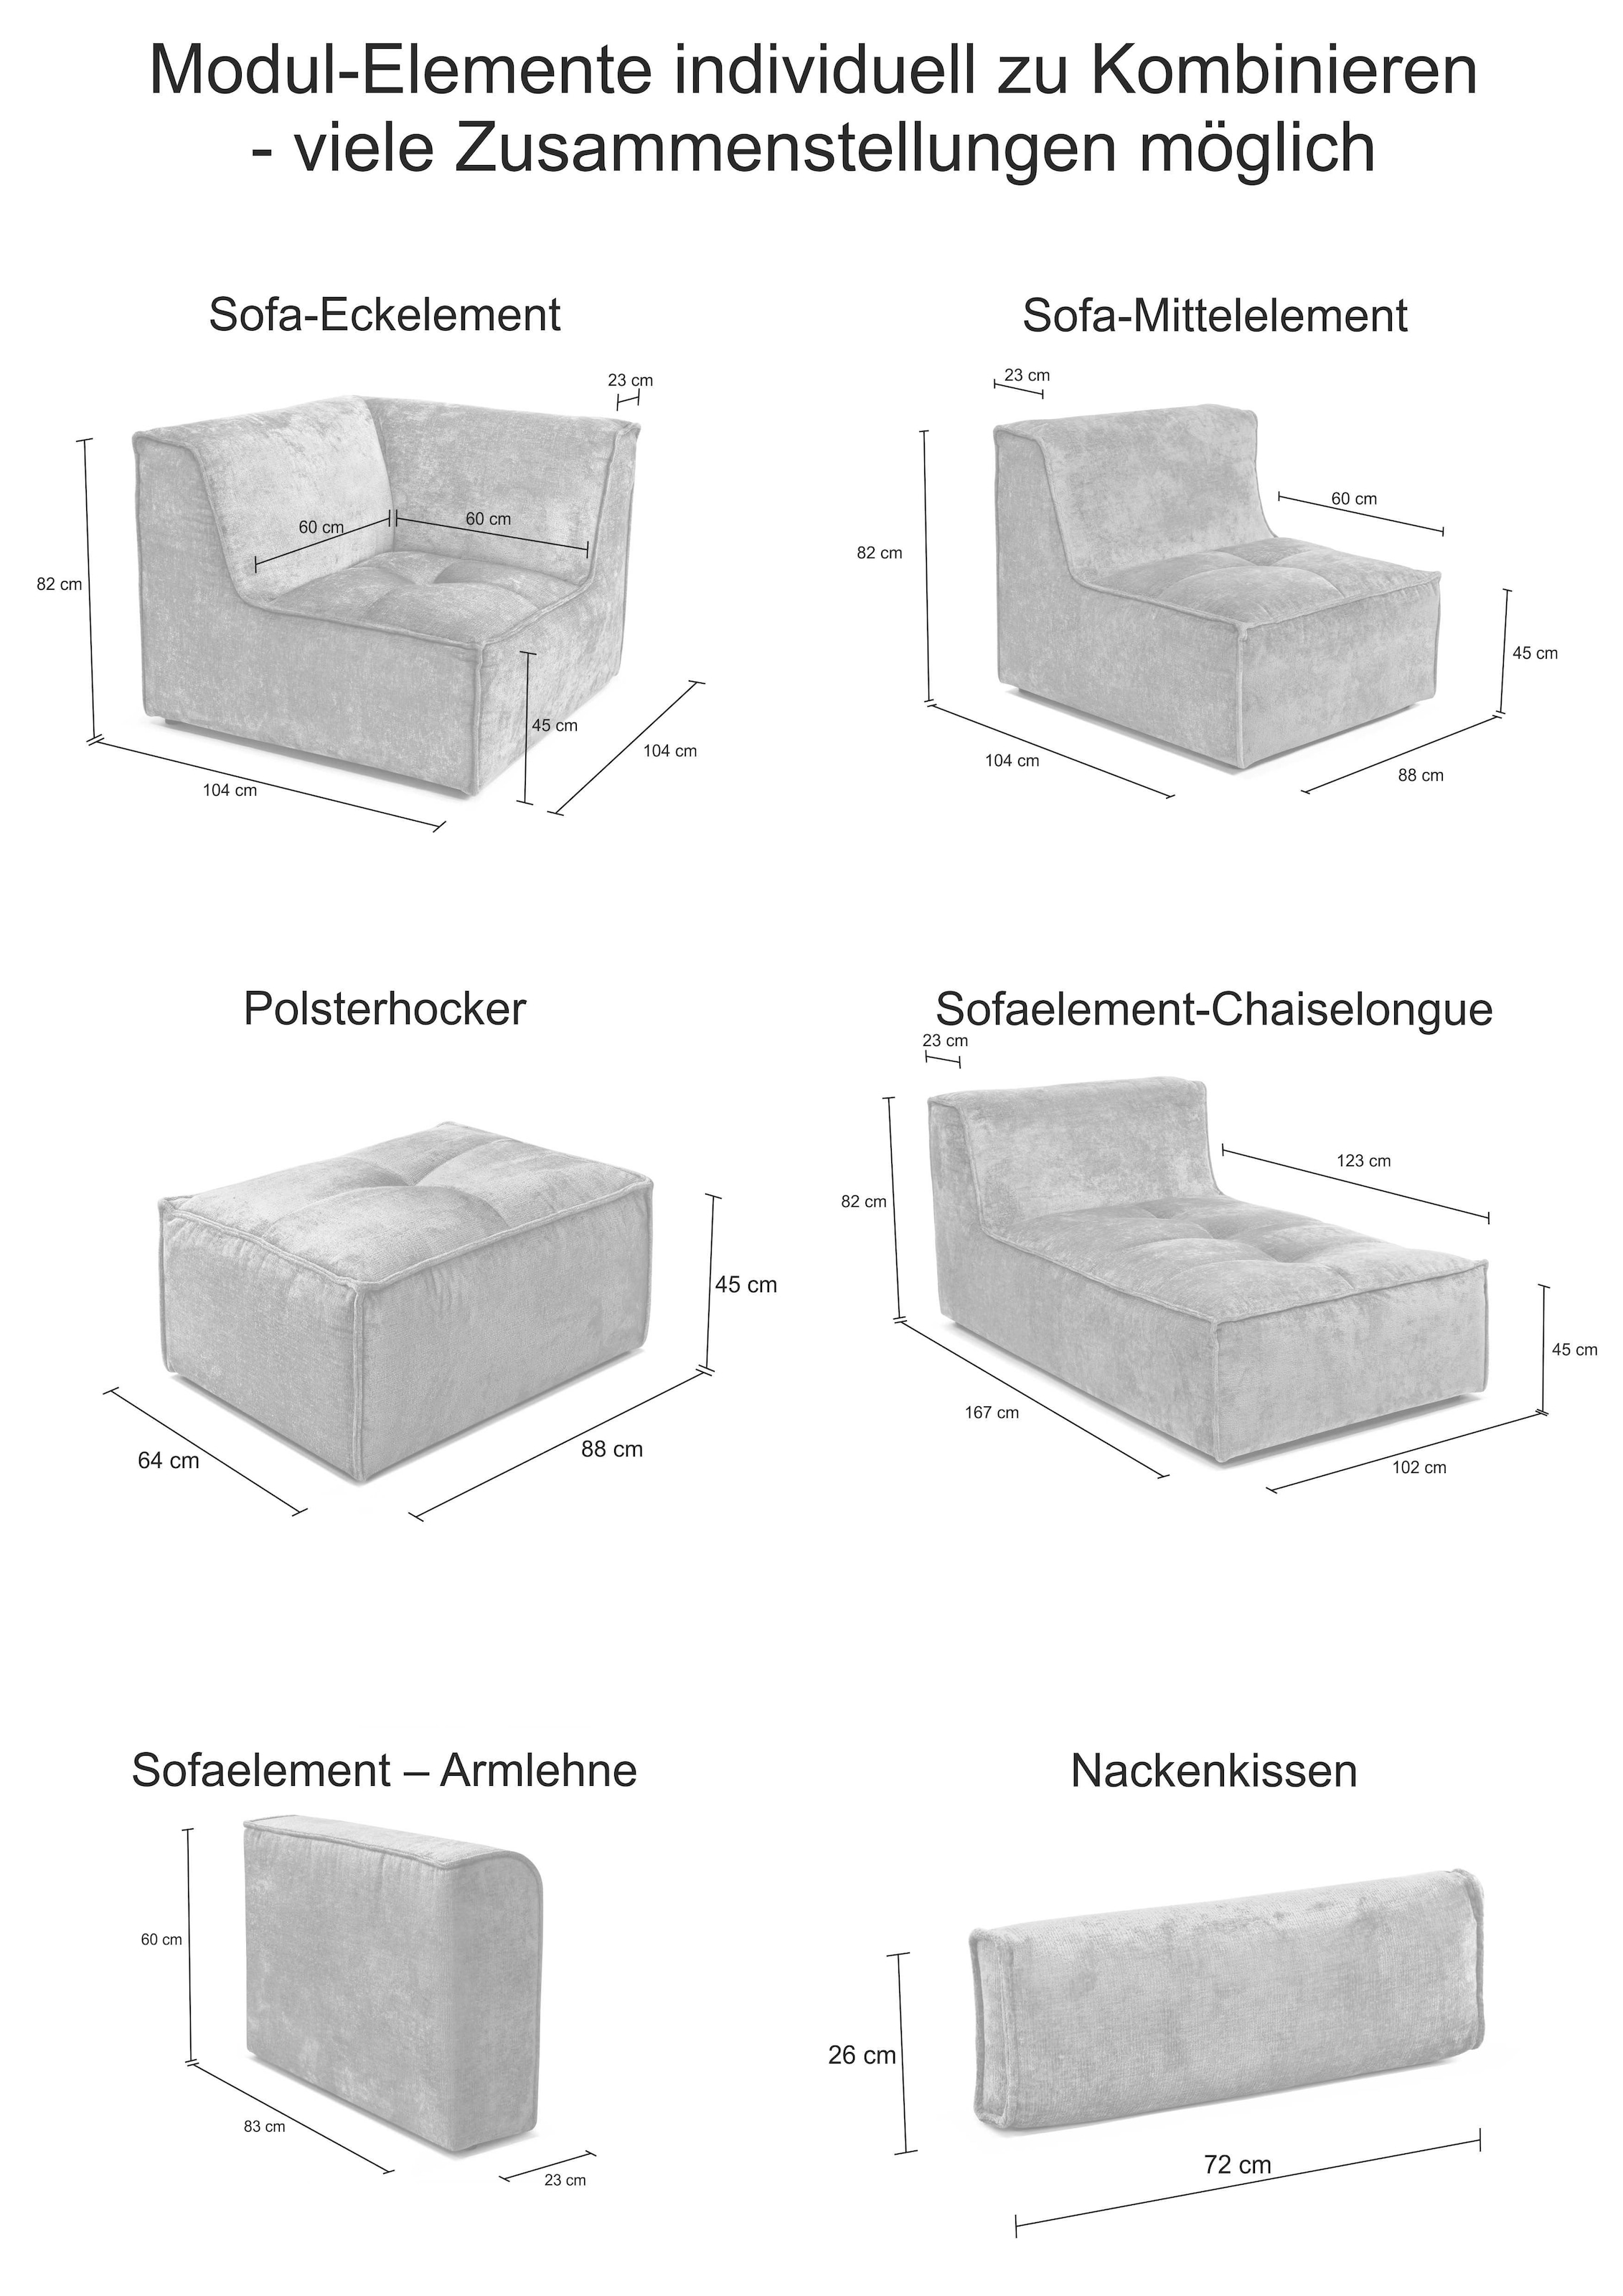 | Sofa-Mittelelement BAUR RAUM.ID